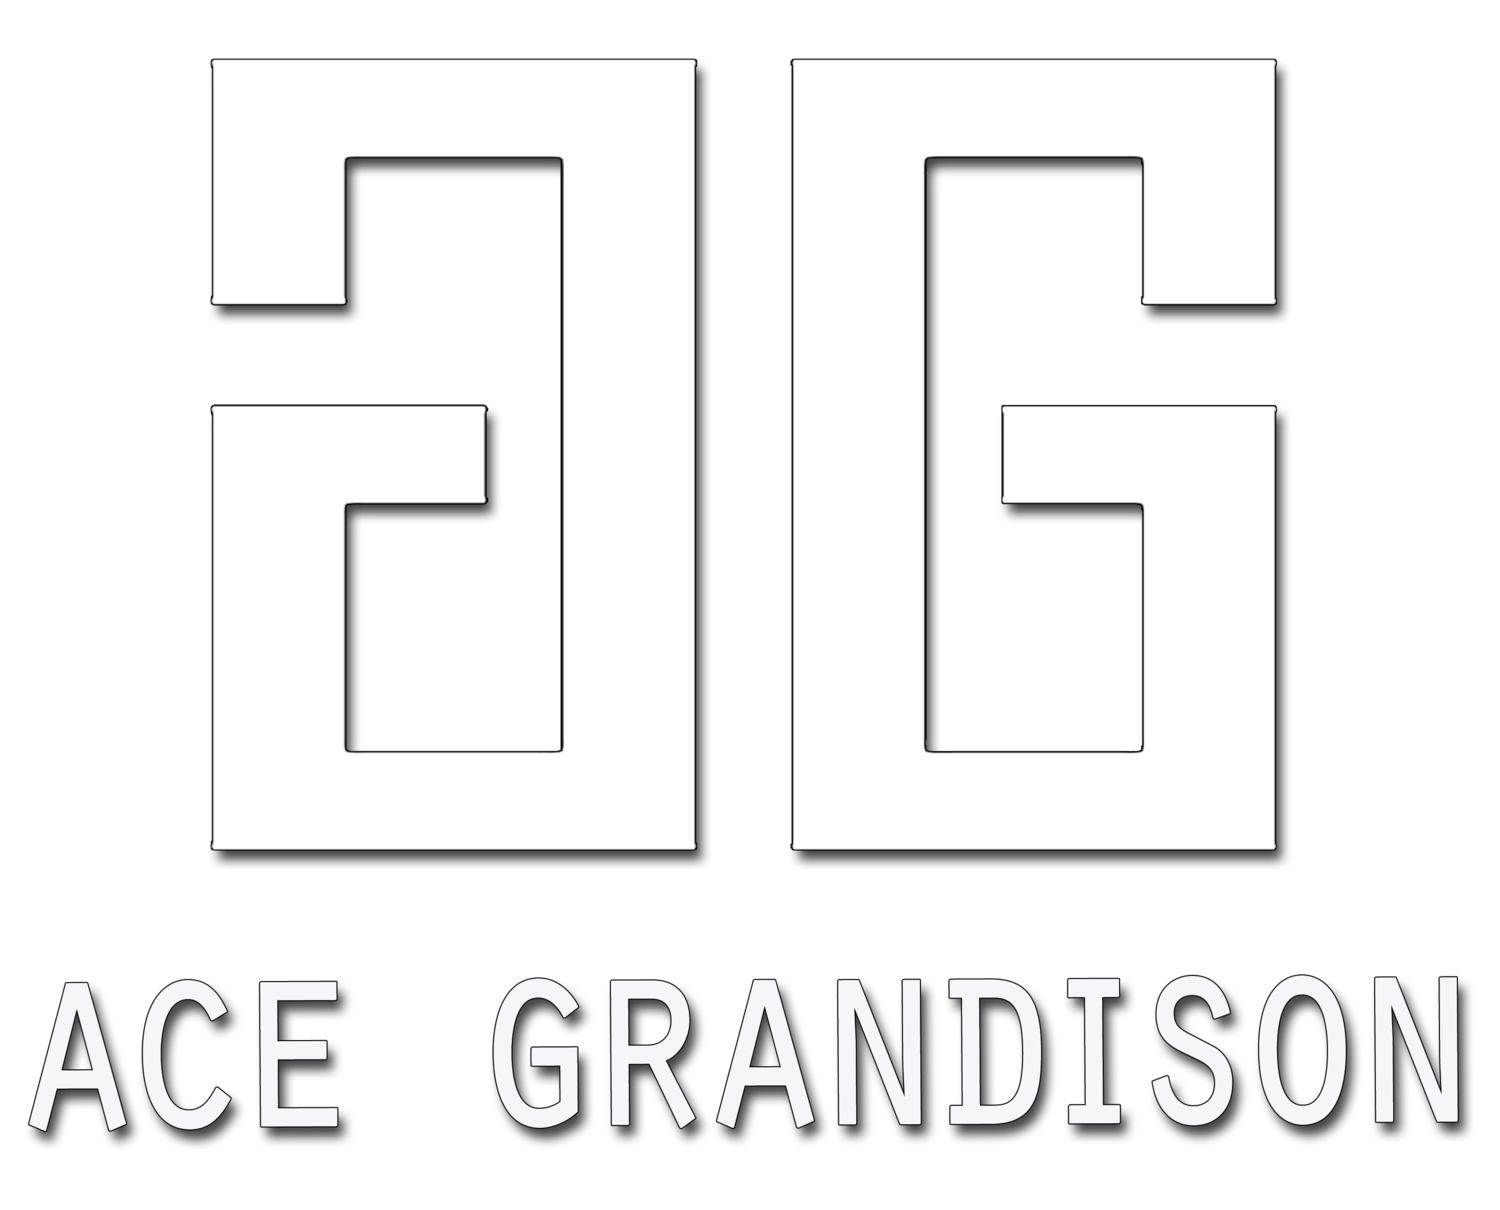 Ace Grandison